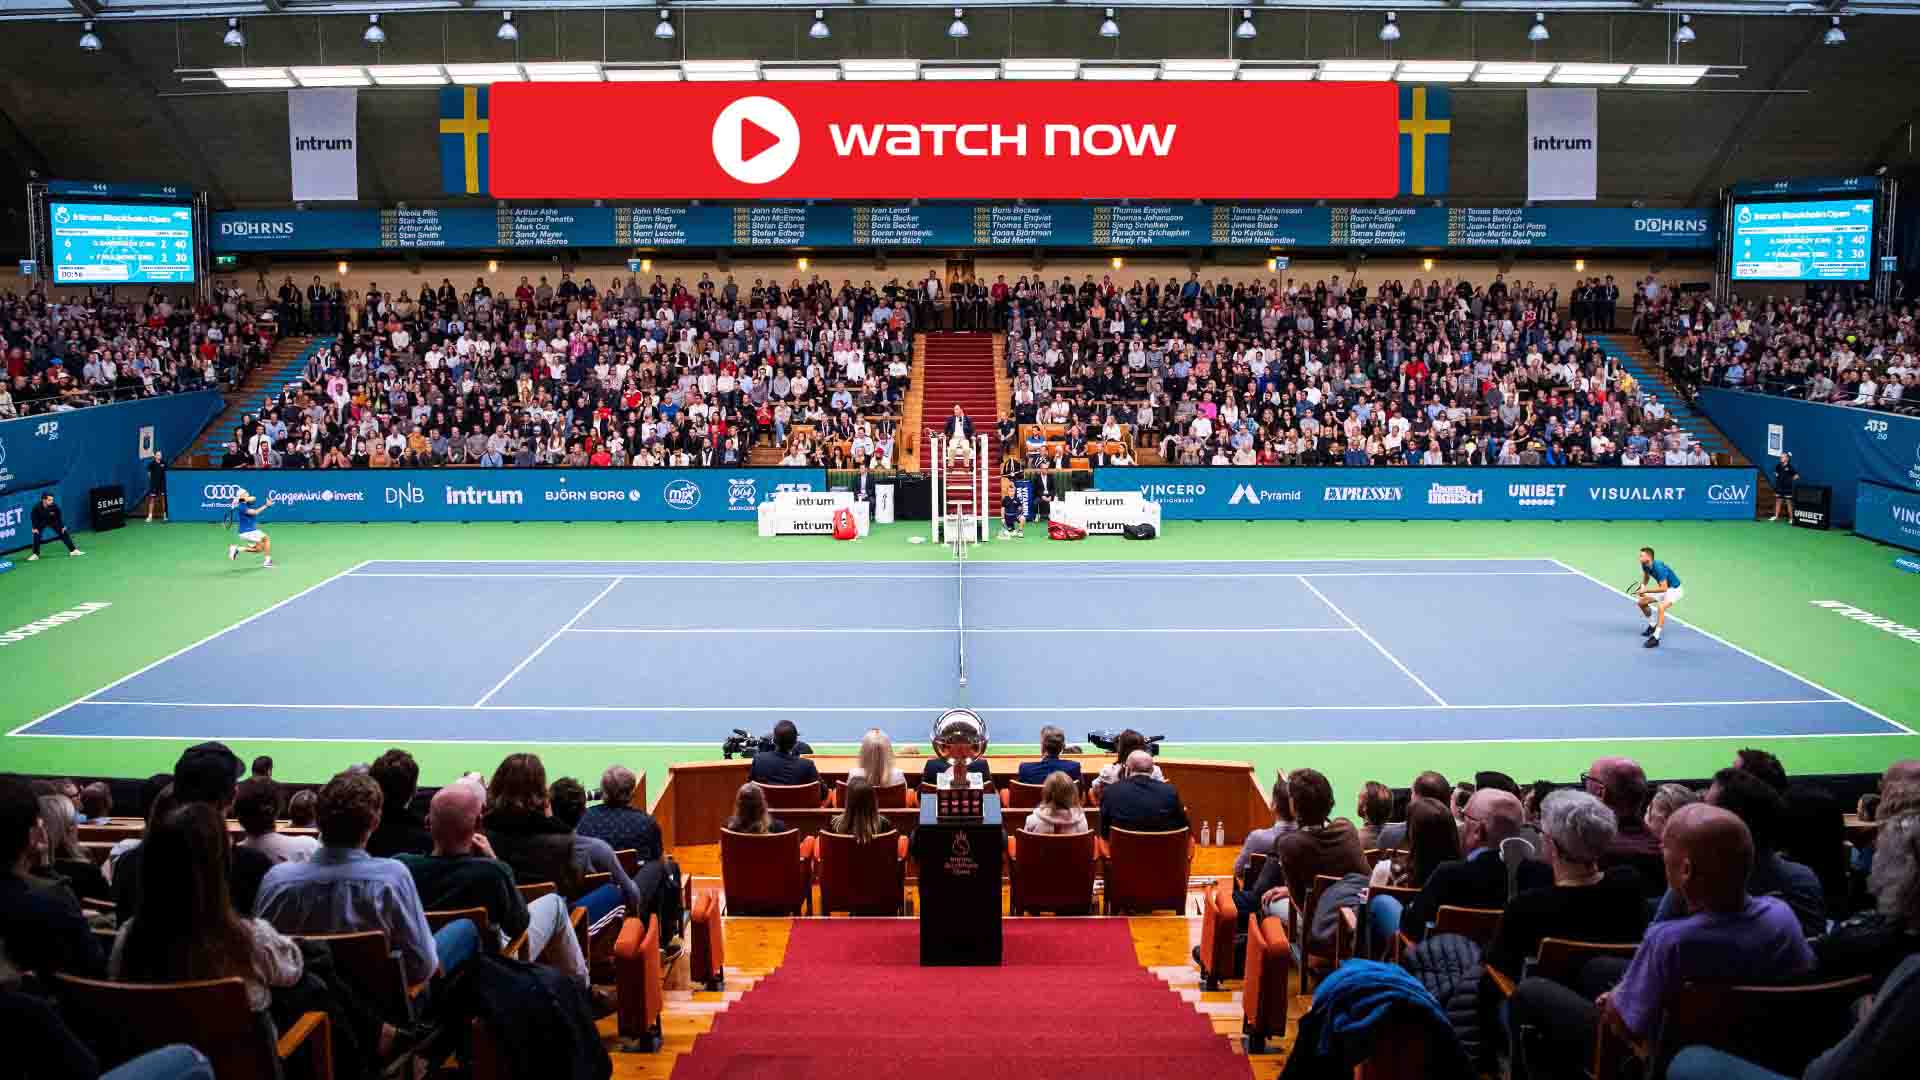 [ATP] Stockholm Open 2021: Live Stream, TV Coverage Info, Schedule - Programming Insider